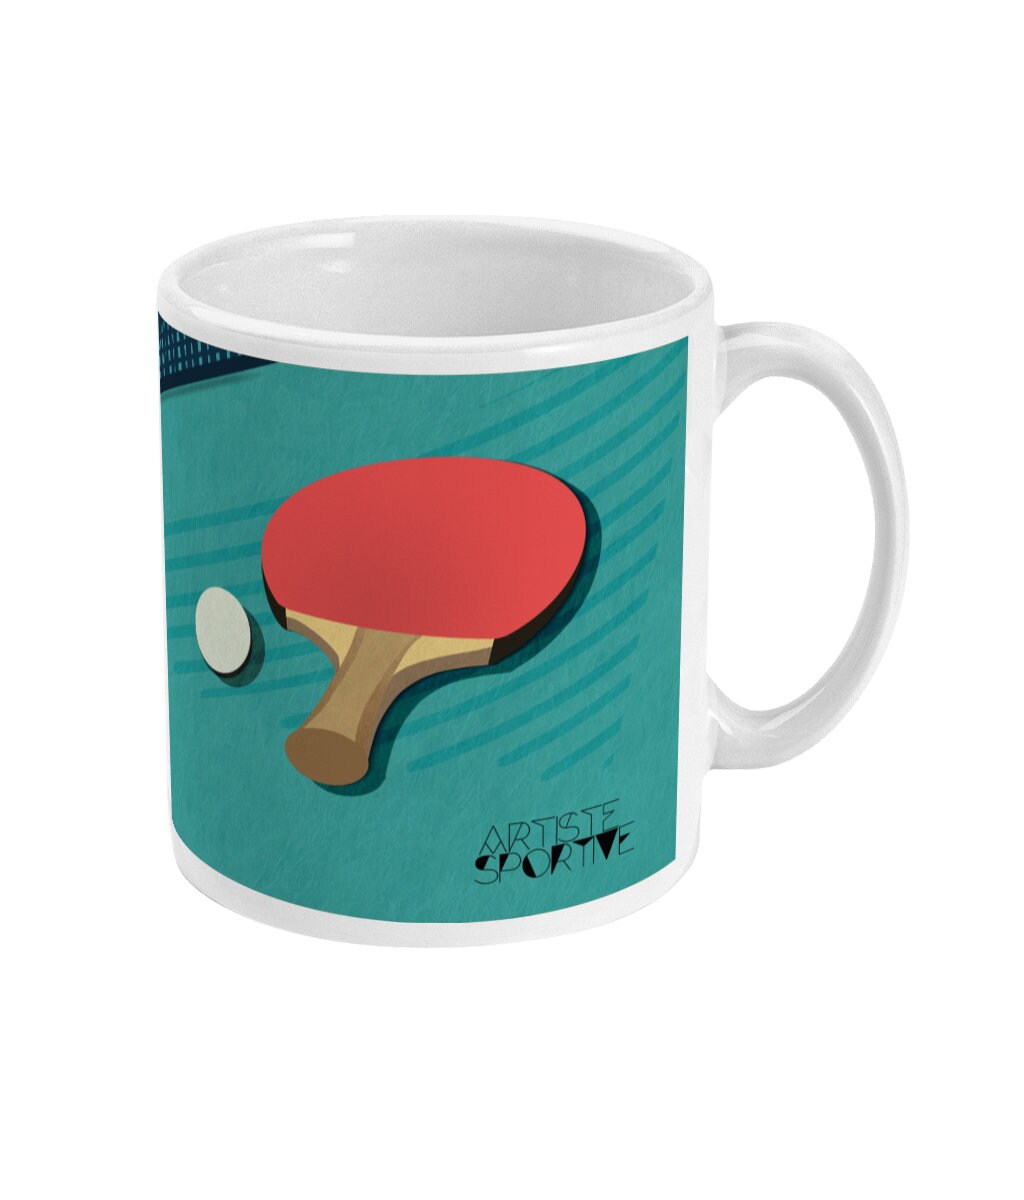 Ping Pong cup or mug "The table tennis racket" - customizable